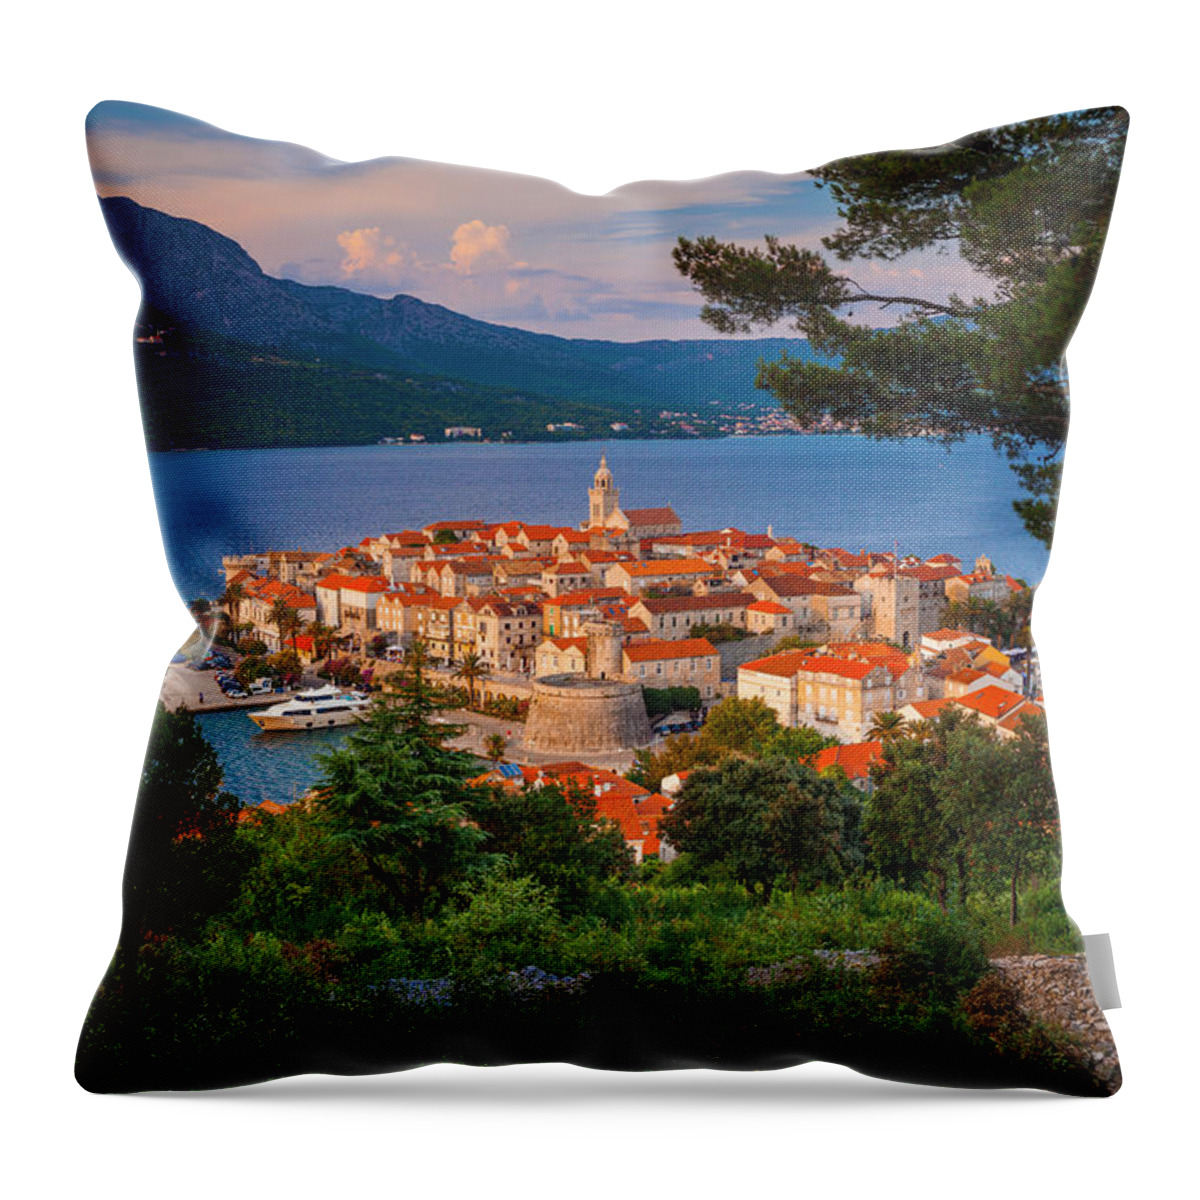 Estock Throw Pillow featuring the digital art Croatia, Dalmatia, Korcula Island, Adriatic Coast, Mediterranean Sea. Adriatic Sea, Korcula, Panorama Of The City In Evening Light by Olimpio Fantuz